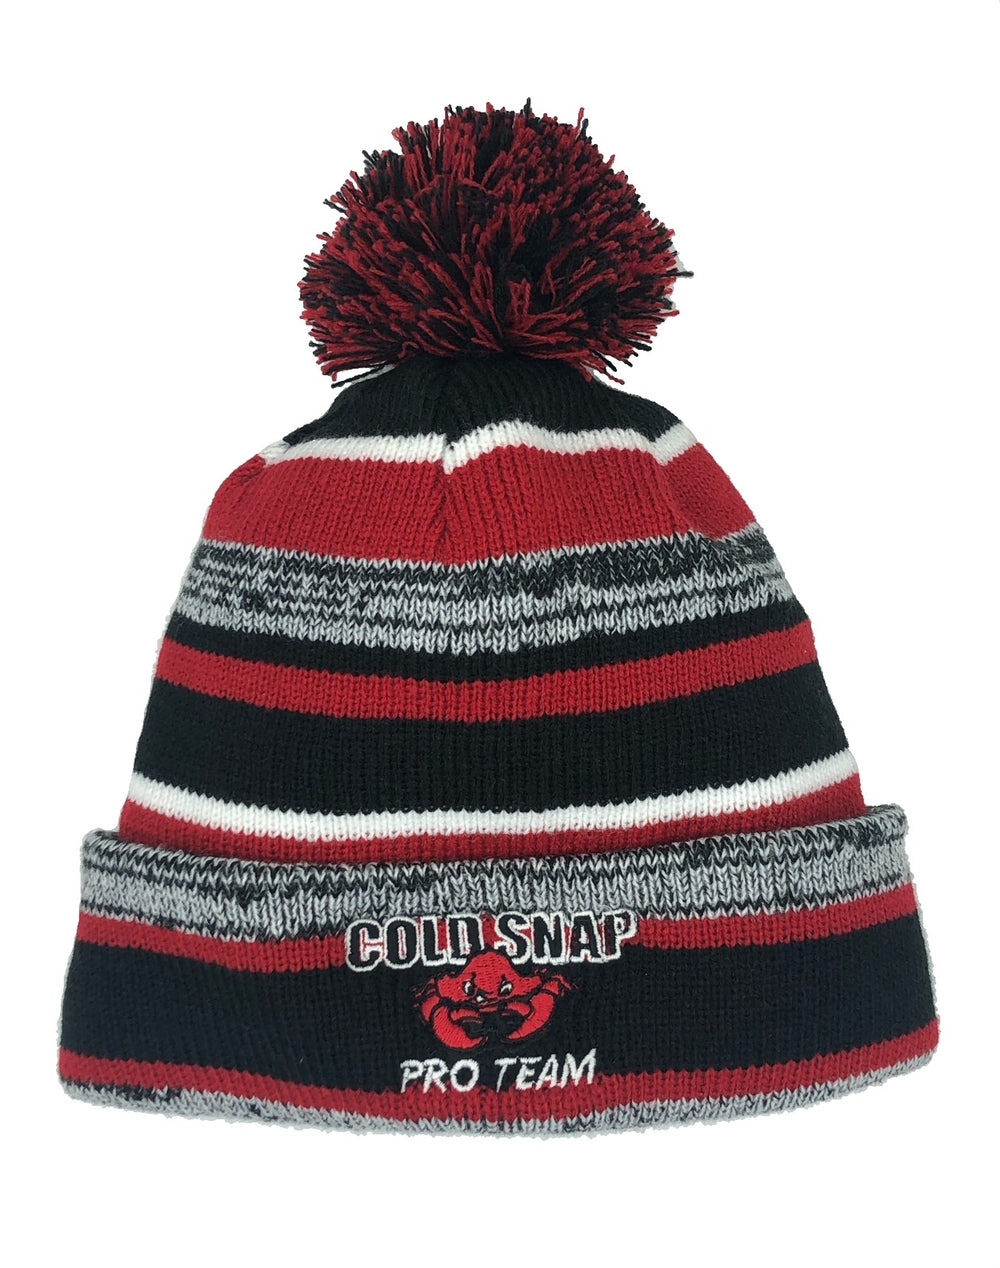 Cold Snap Pro Team Stocking Cap